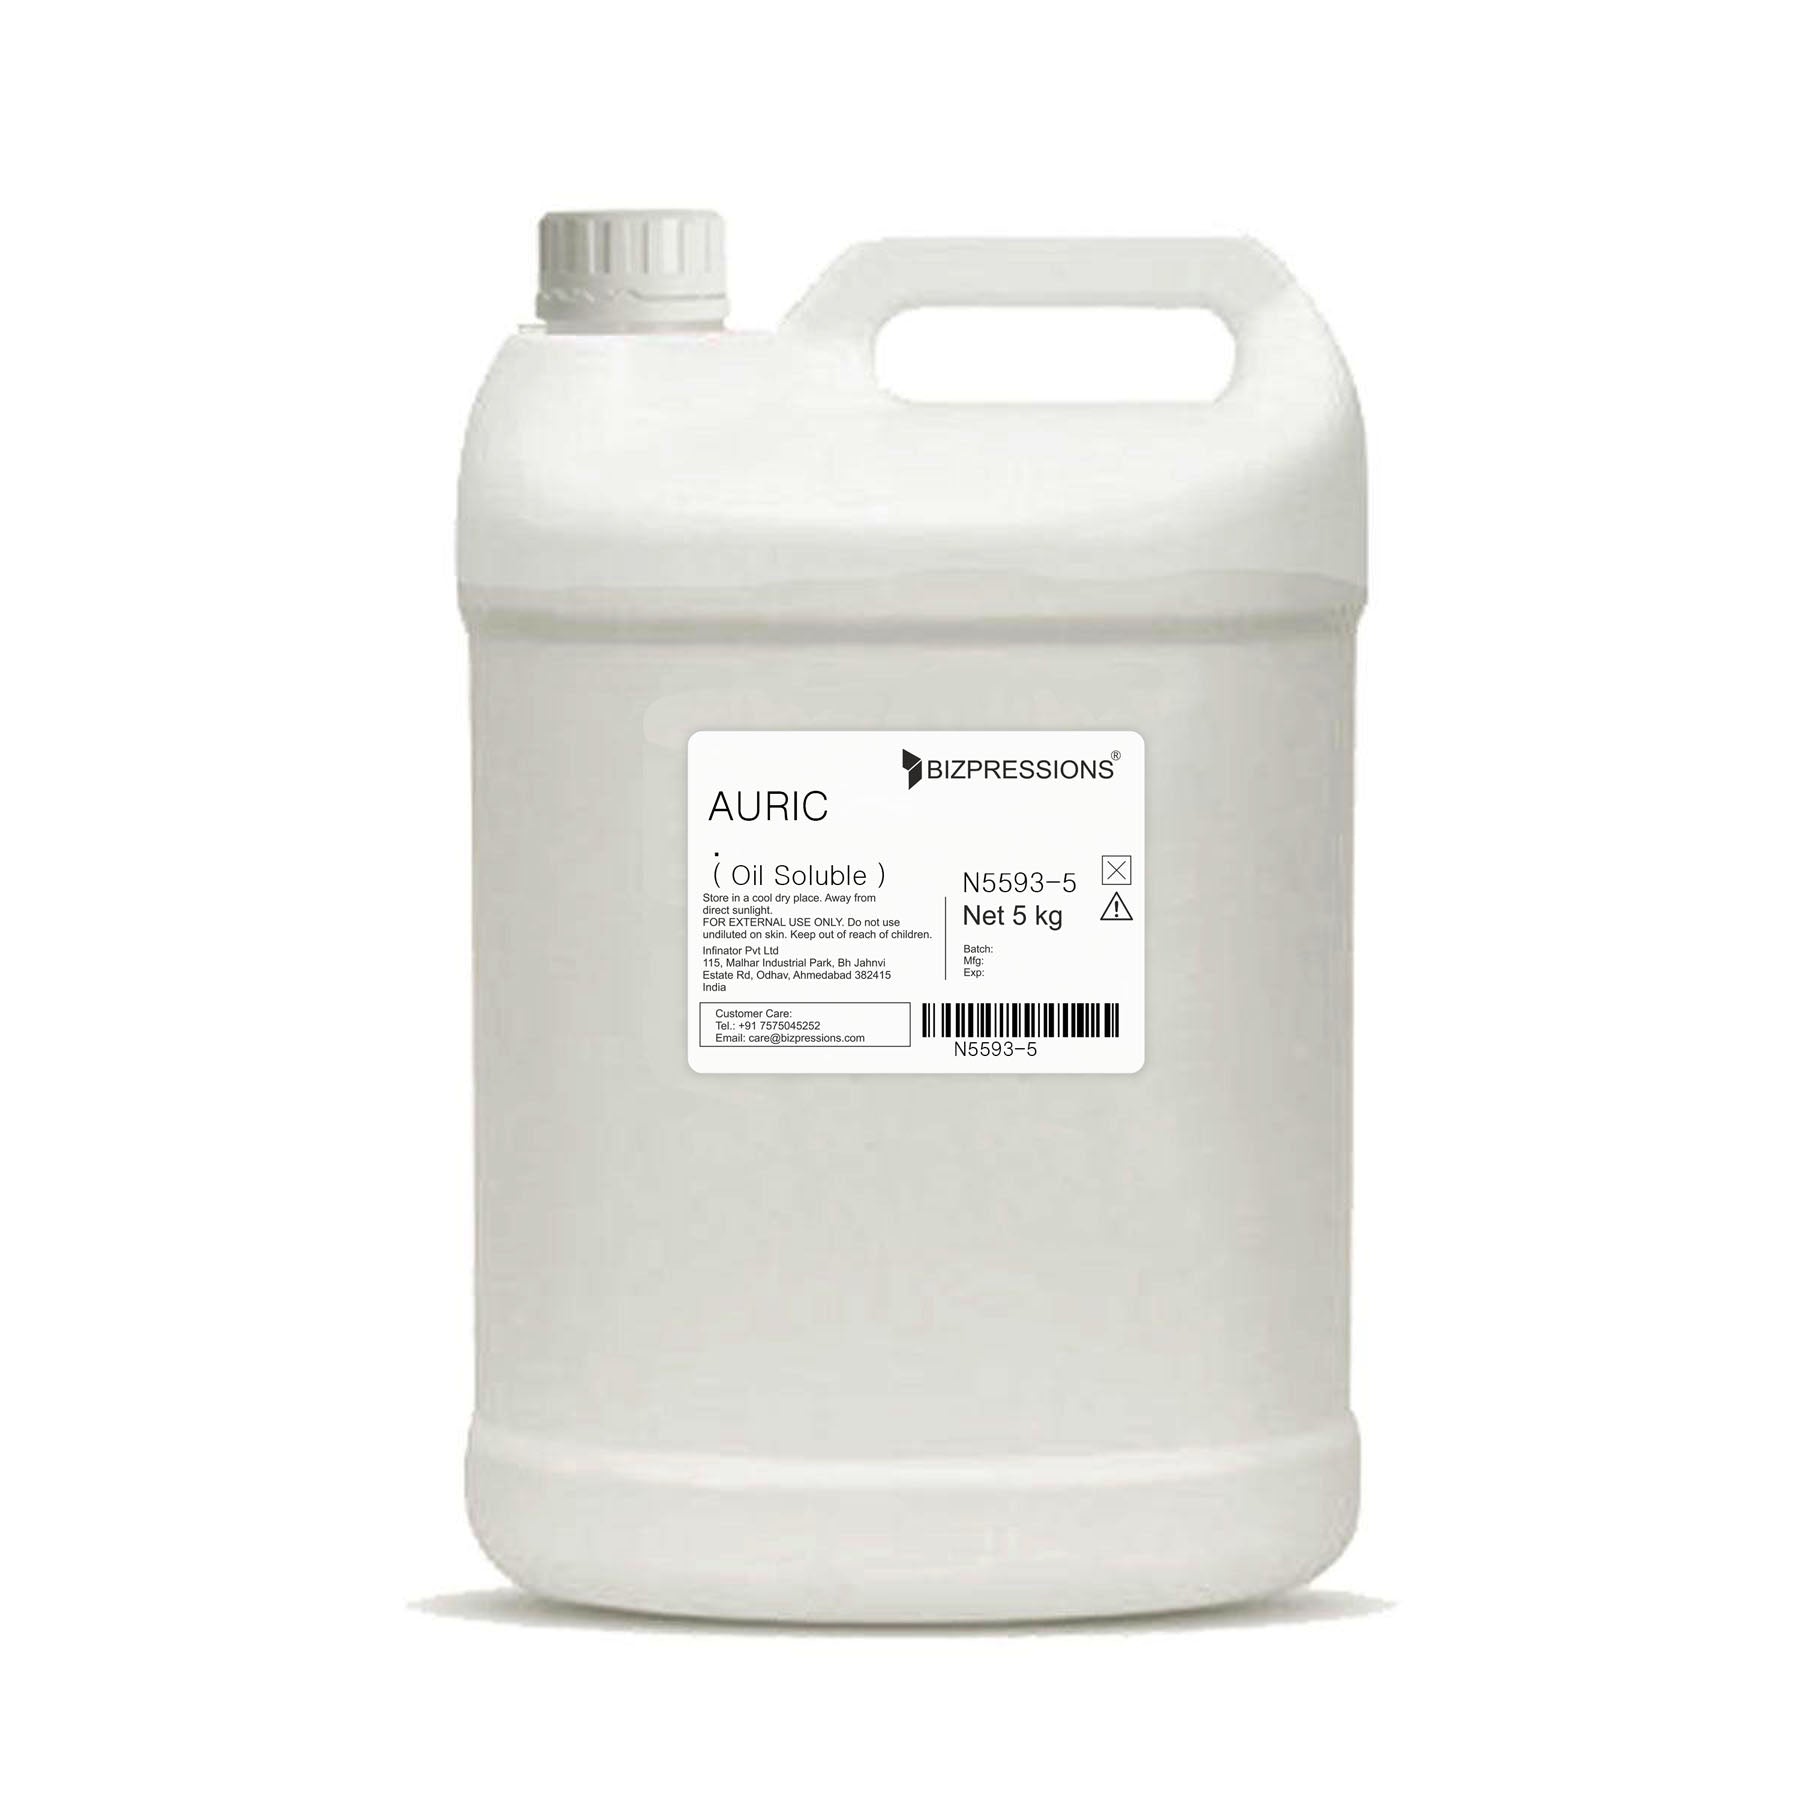 AURIC - Fragrance ( Oil Soluble ) - 5 kg